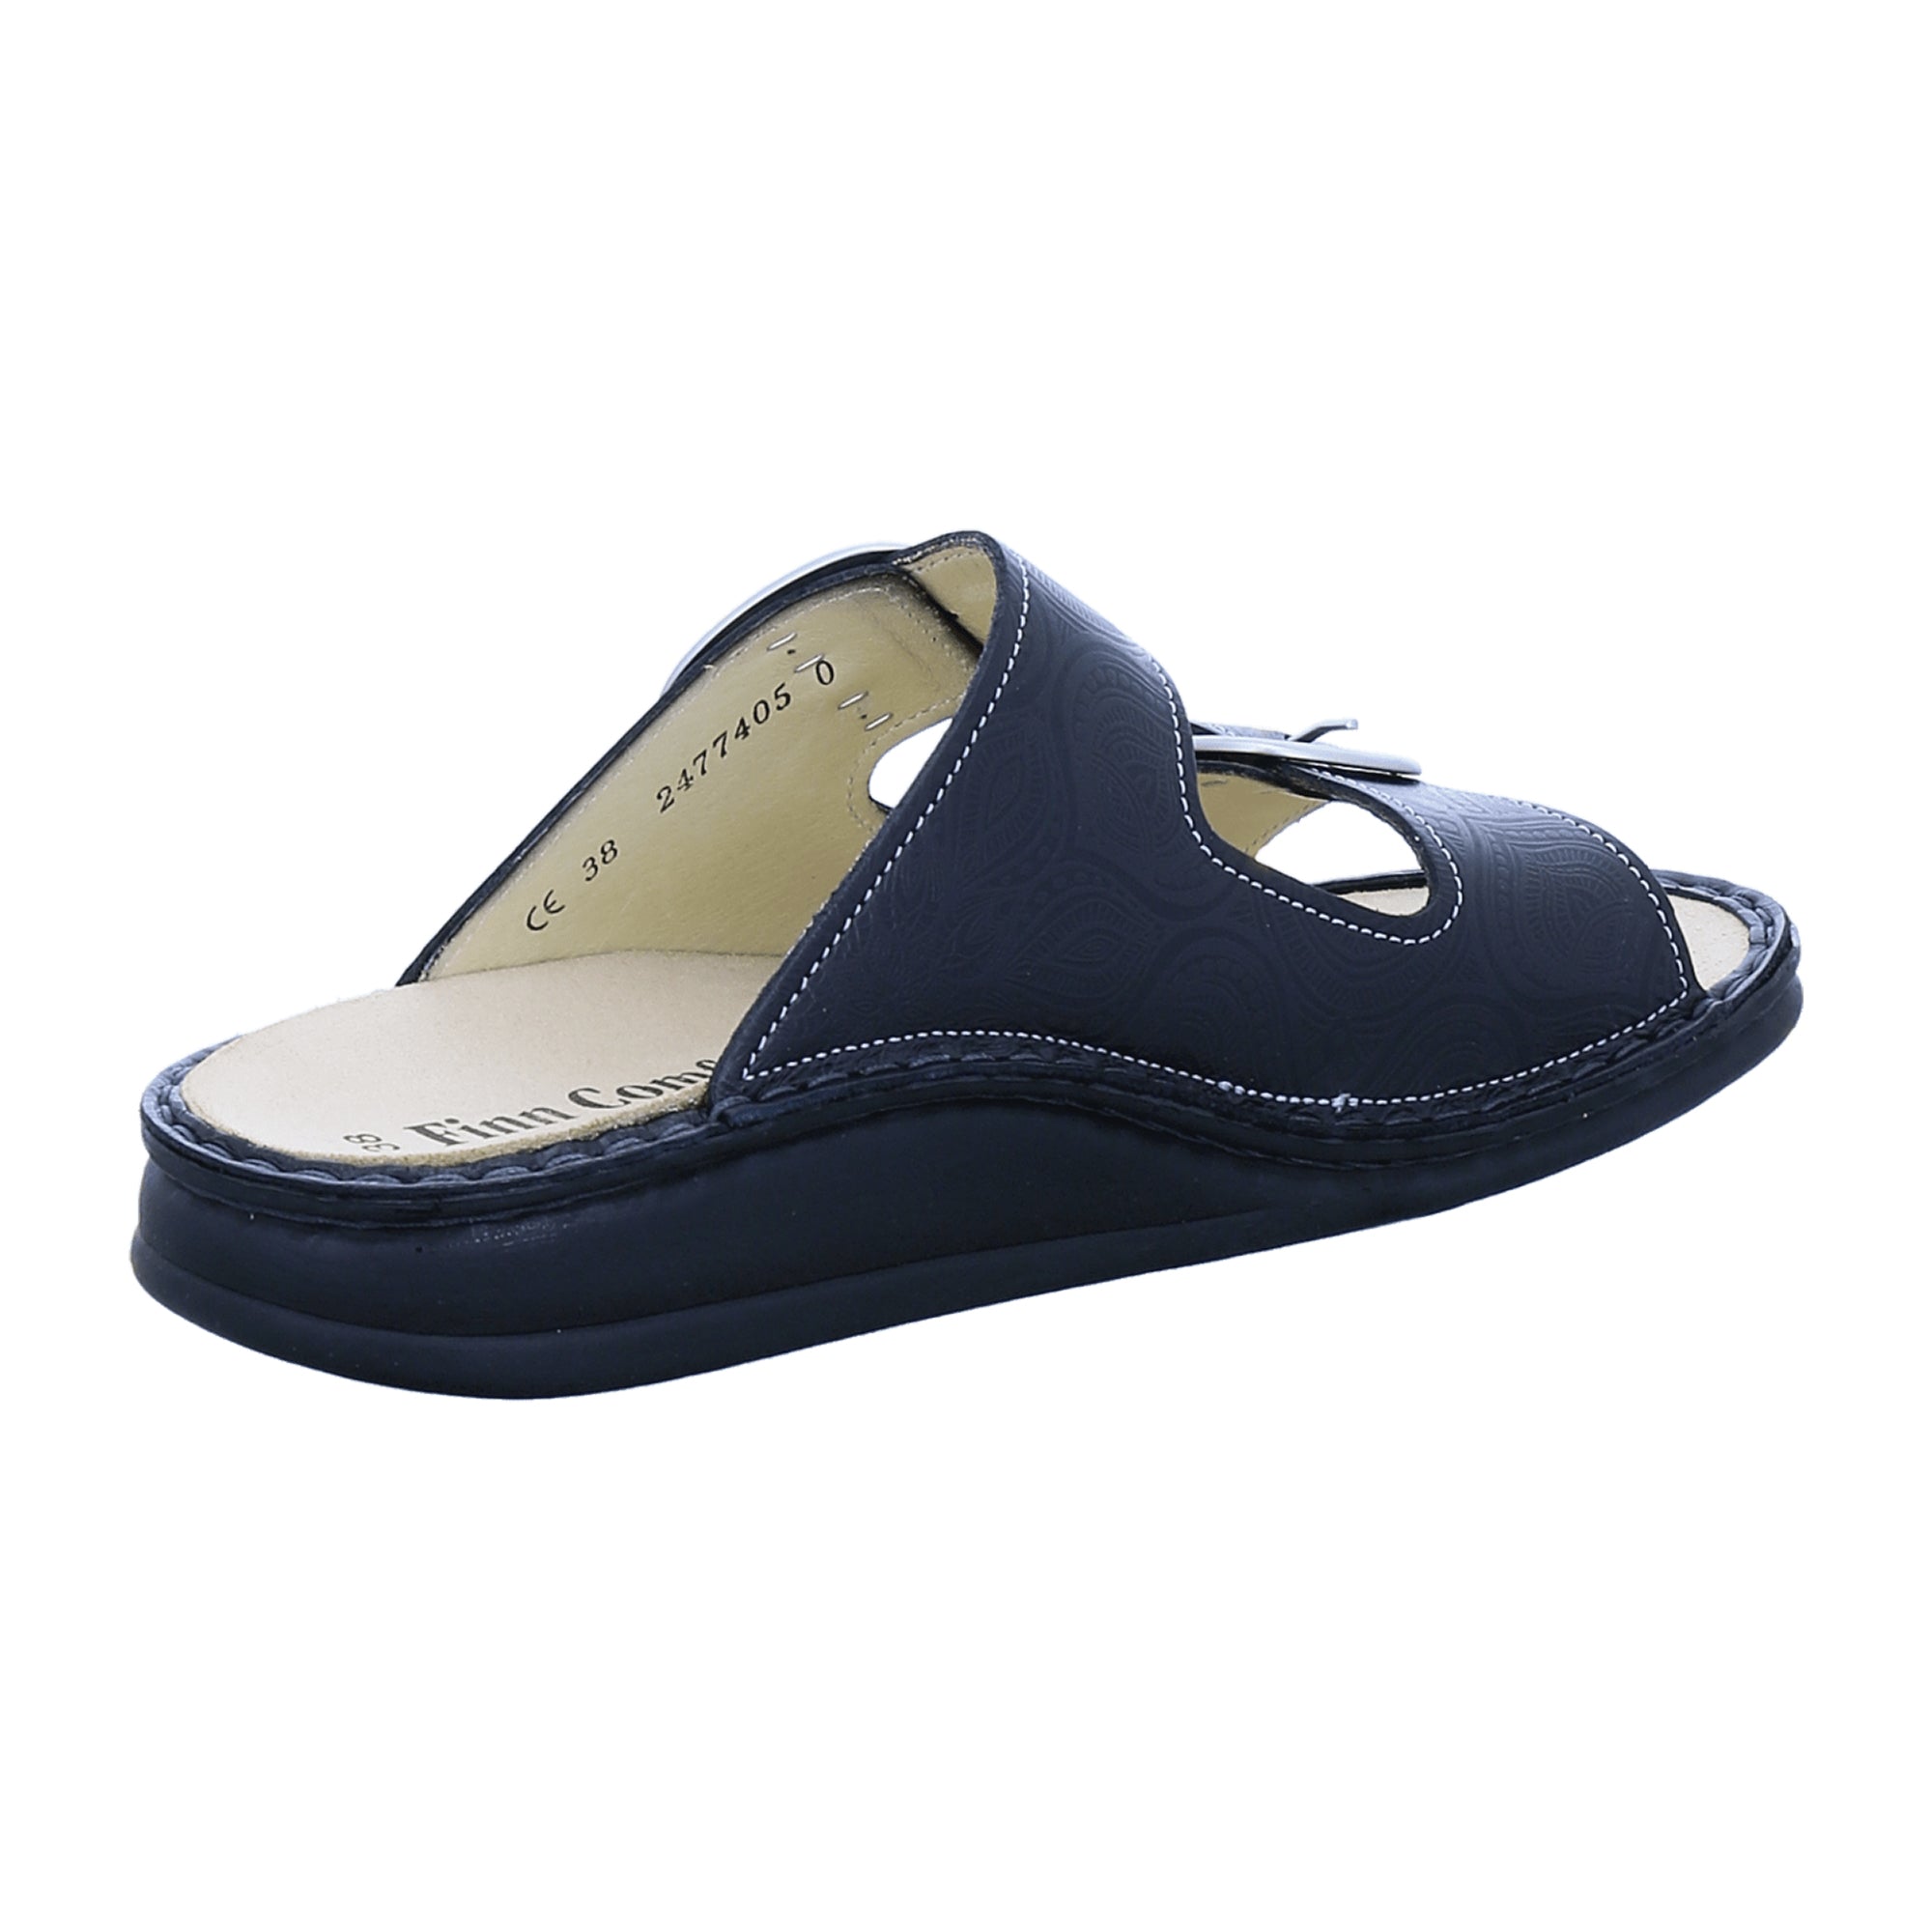 Finn Comfort Lipari Women's Comfort Sandals - Elegant Black